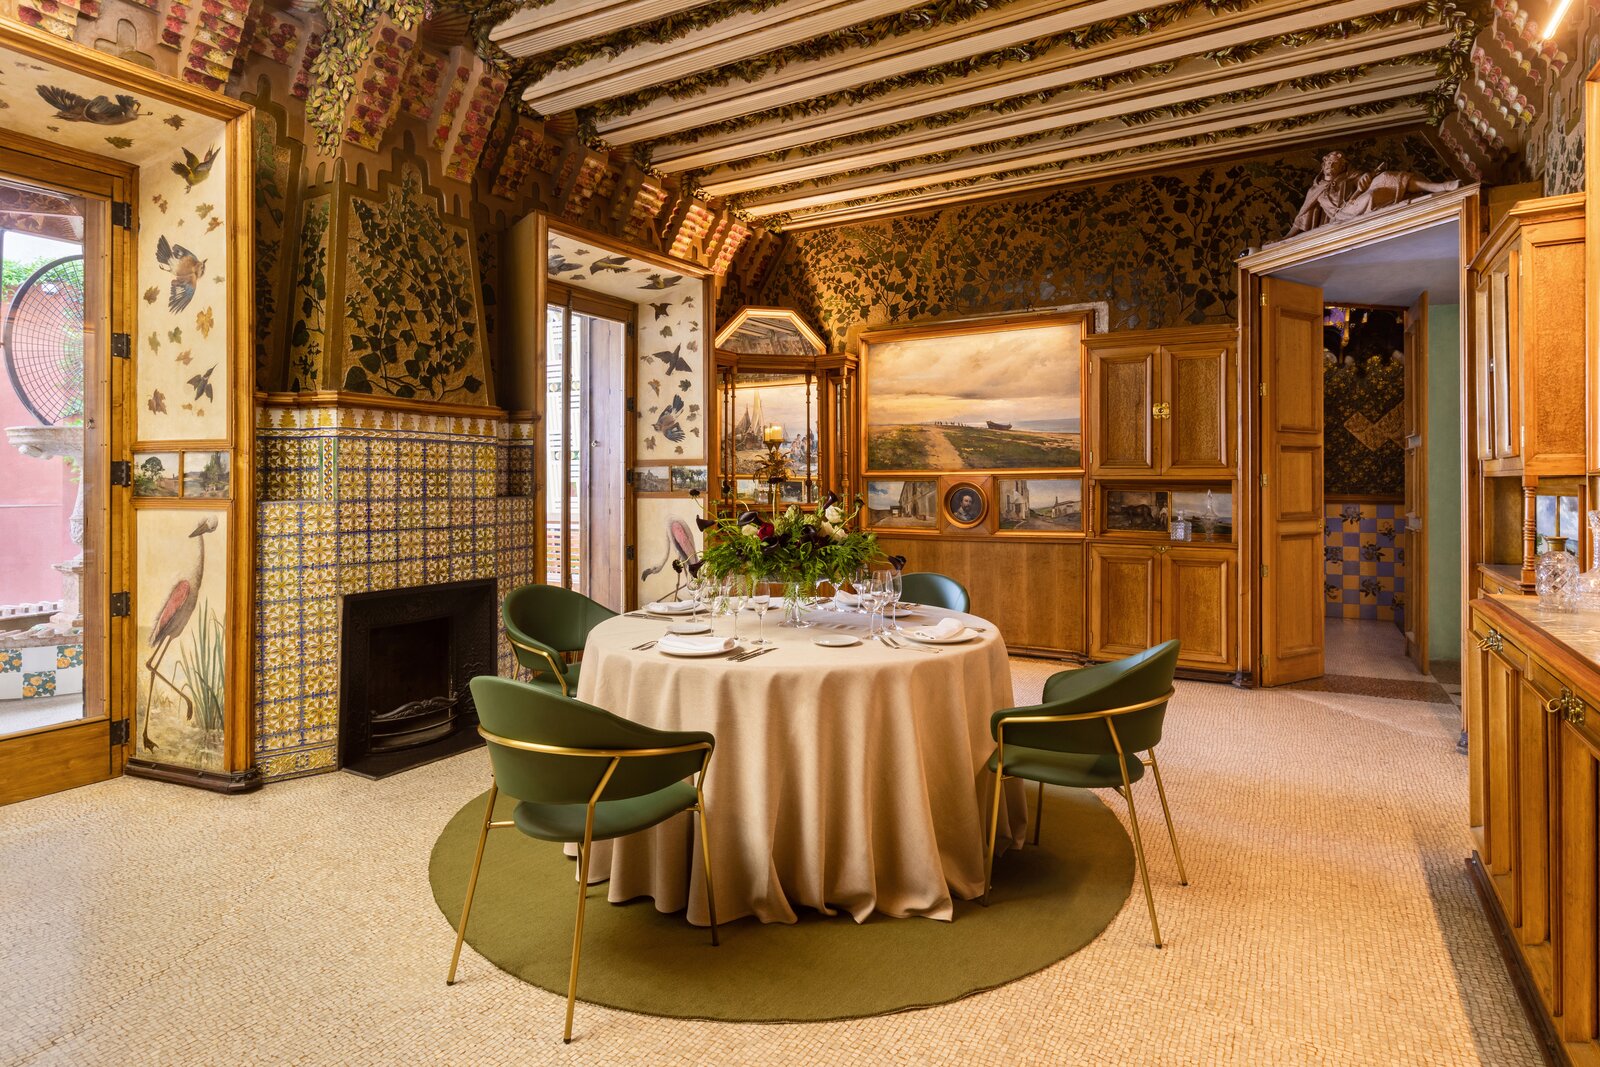 Antoni Gaudí’s First-Ever Designed House